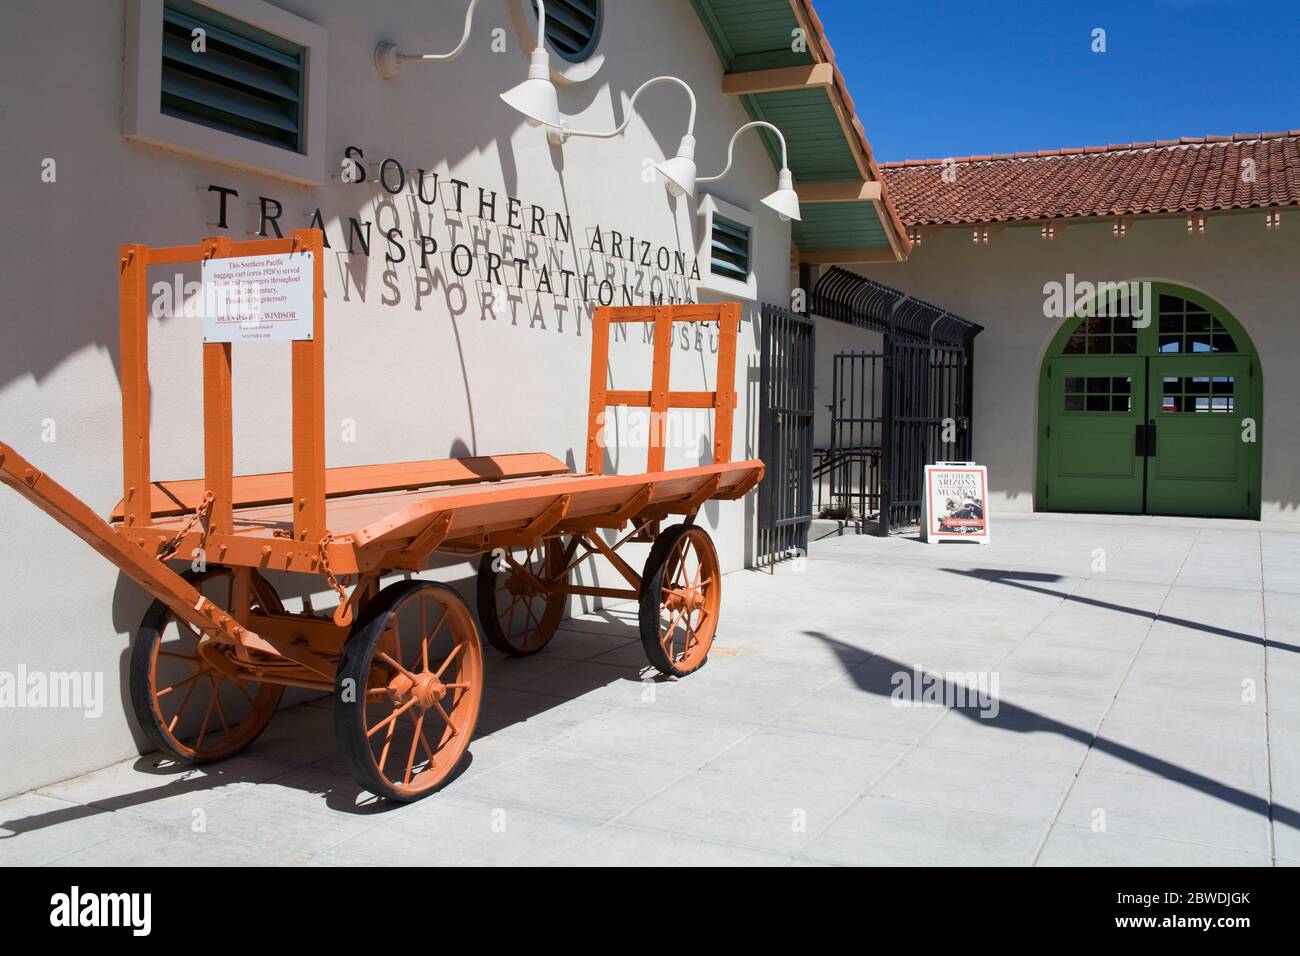 Southern Arizona Transportation Museum, Tucson, Pima County, Arizona, USA Stockfoto